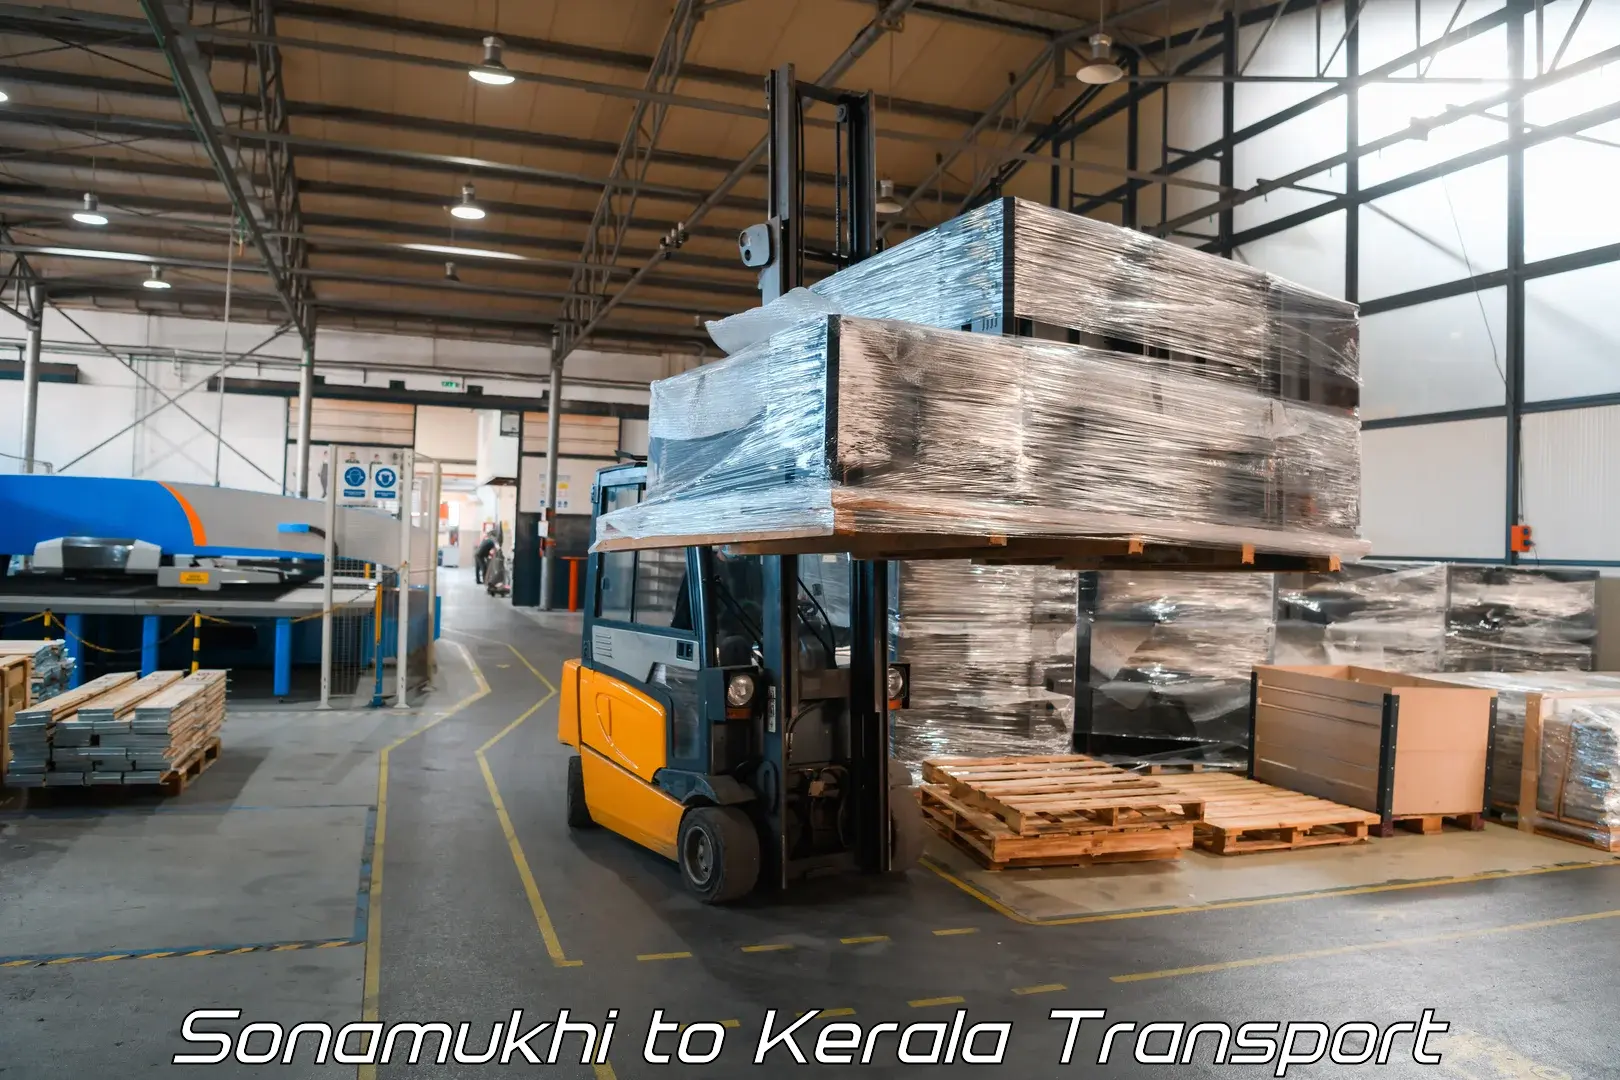 Transport in sharing Sonamukhi to Kottayam